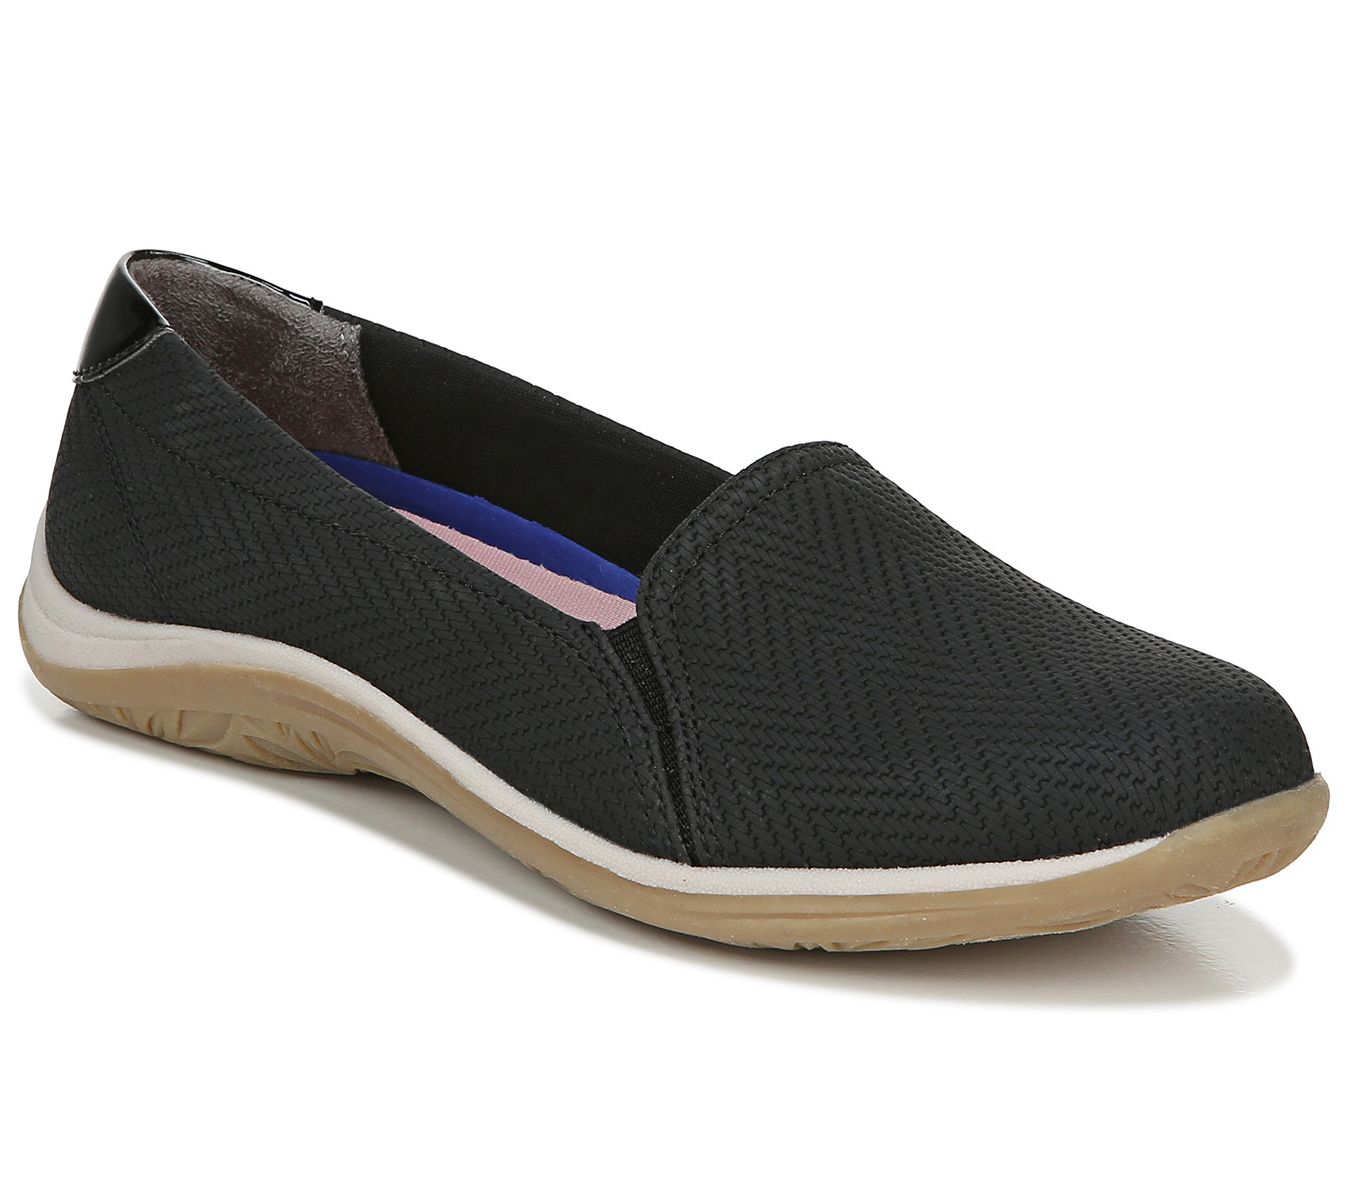 Dr. Scholl's Sporty Slip-On Shoes - Keystone - QVC.com